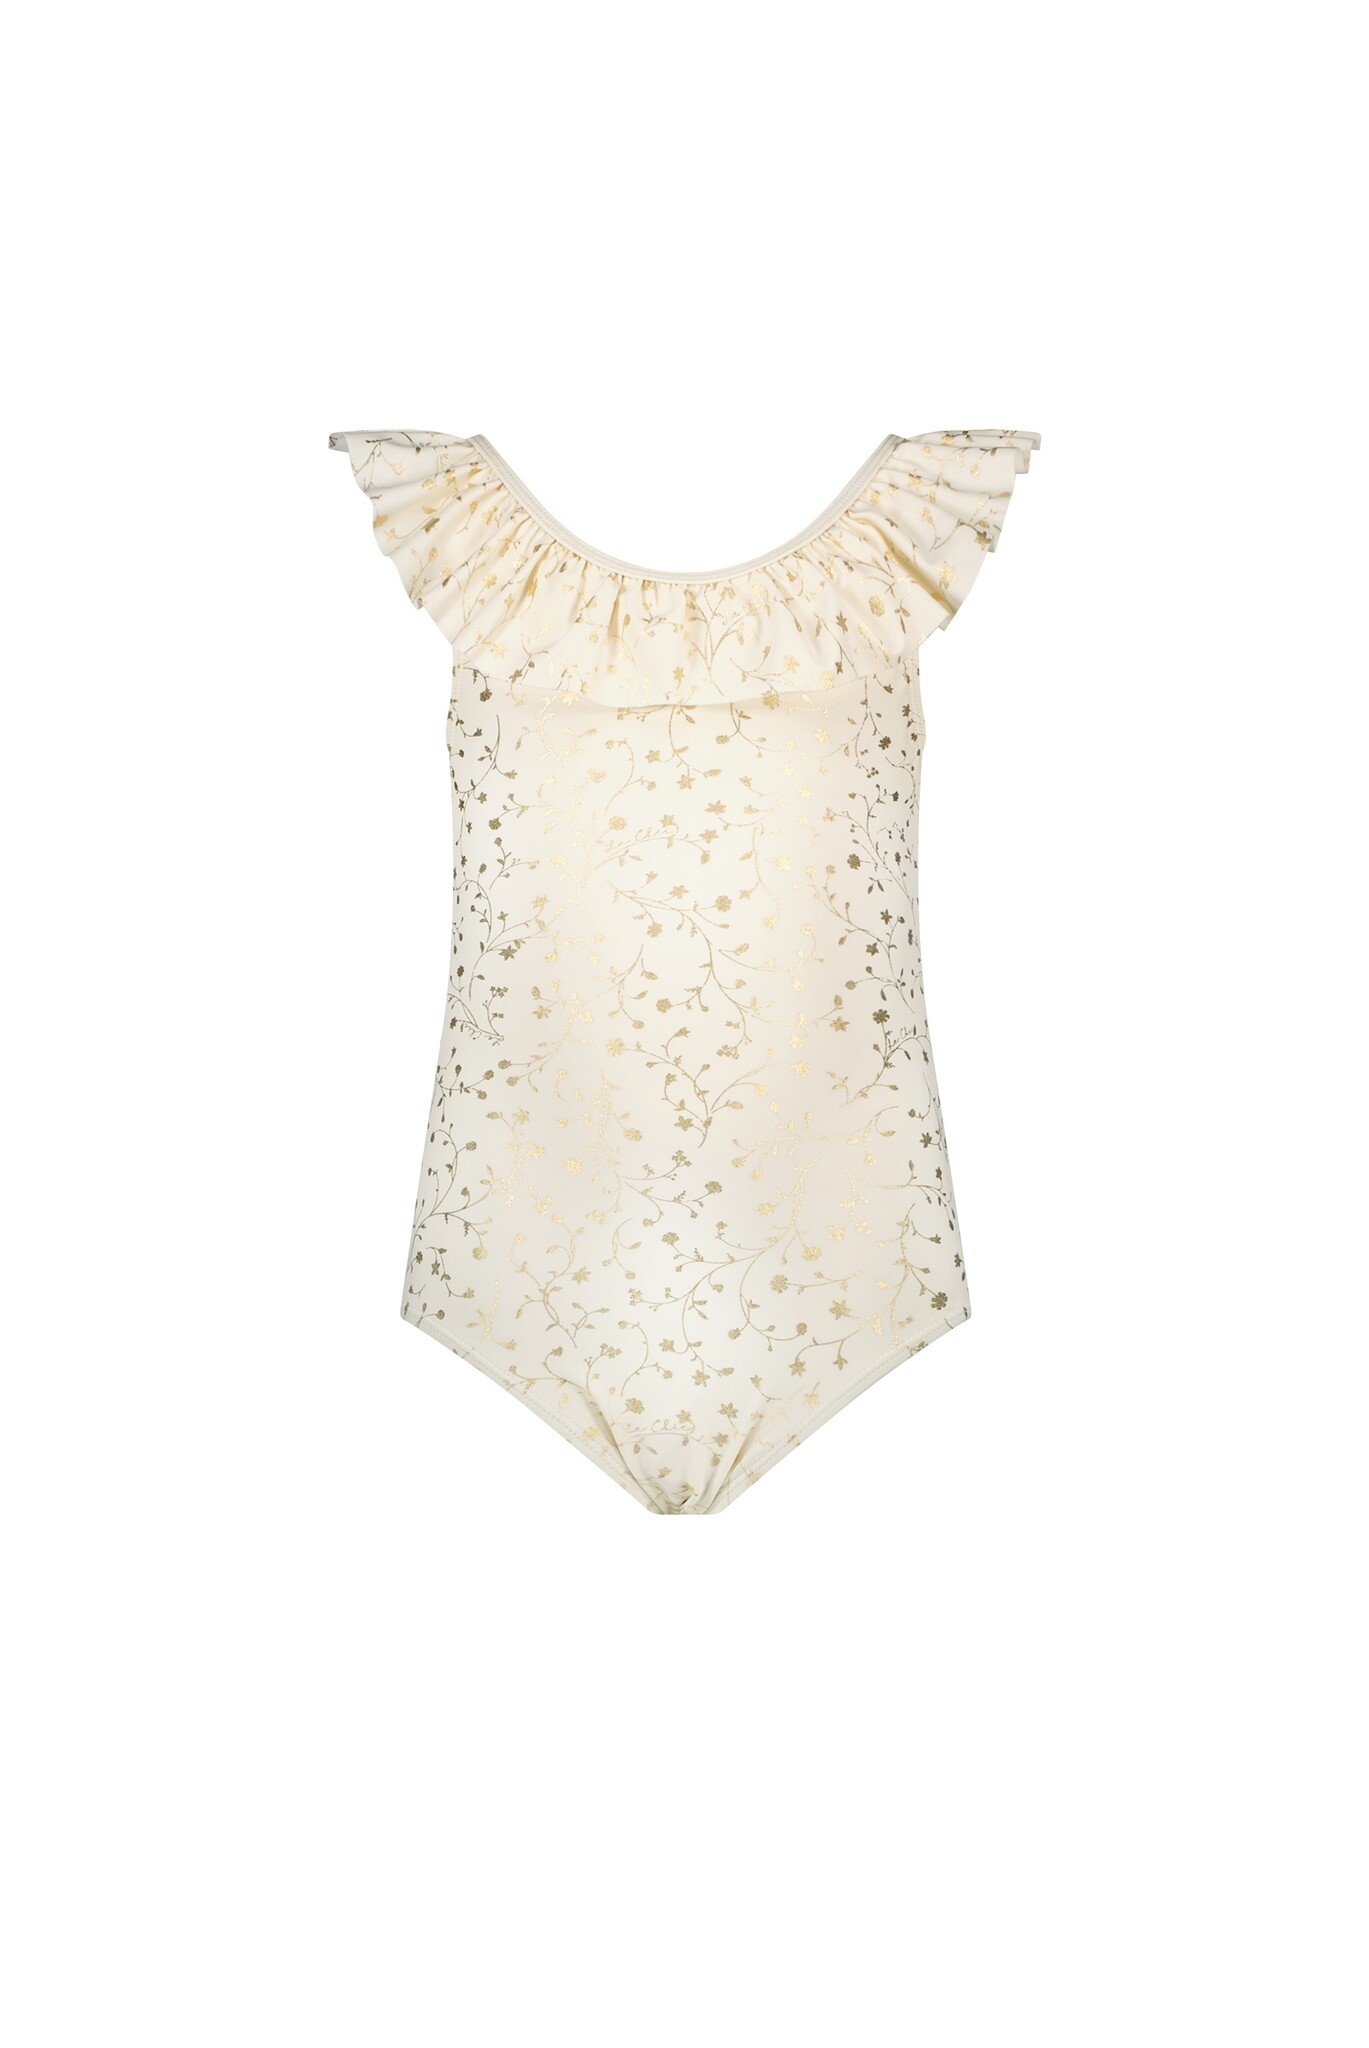 Le Chic C401-5051 Meisjes Jumpsuit - Pearled Ivory - Maat 128